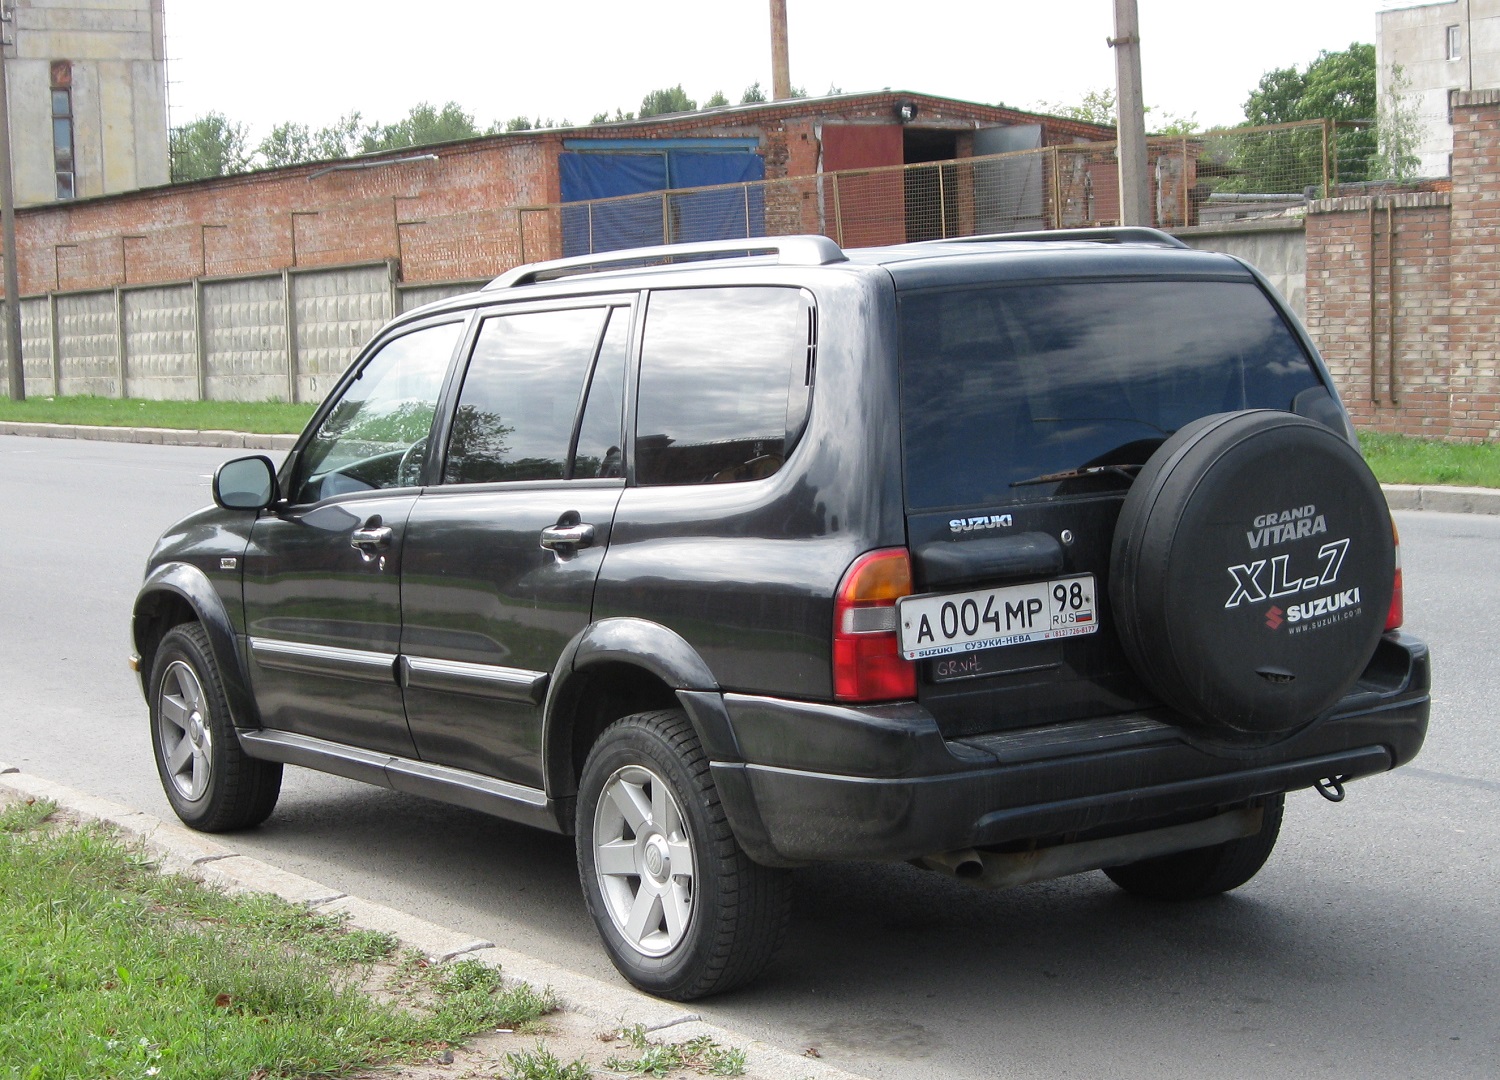 Suzuki vitara xl7. Suzuki Grand Vitara XL-7. Гранд Витара xl7. Suzuki Grand Vitara XL-7 2003.